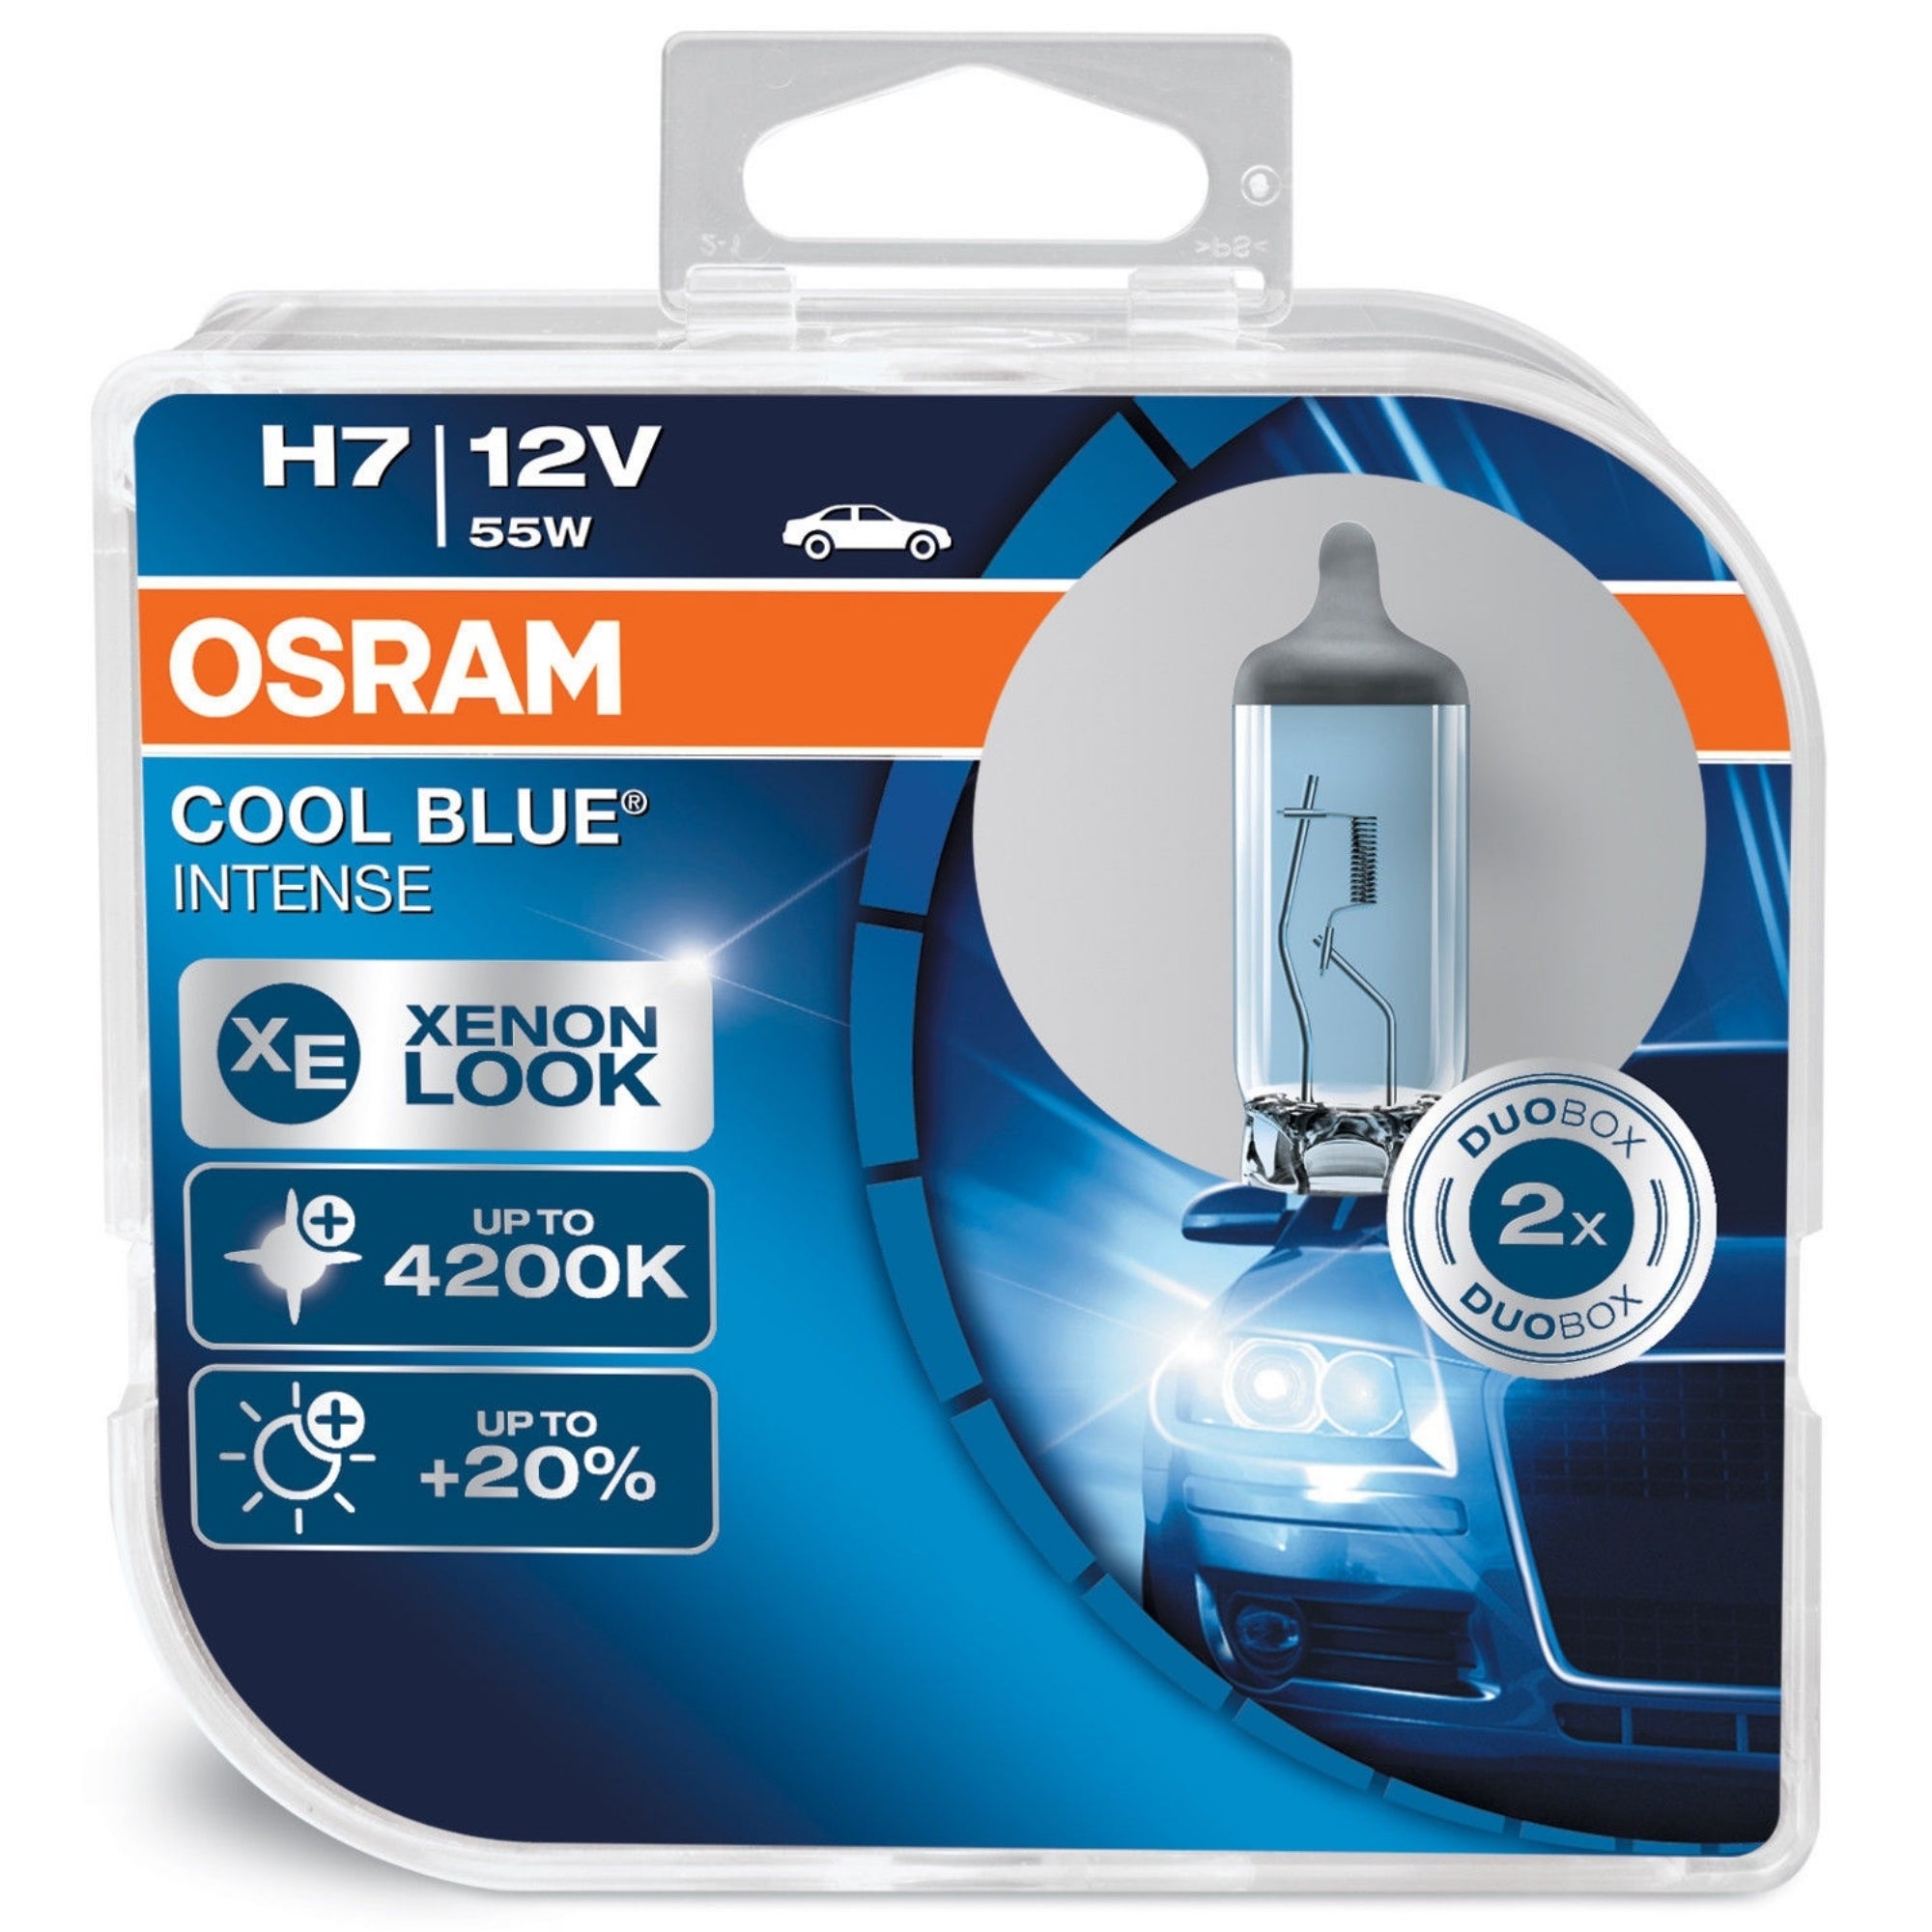 OSRAM H7 12V 55W COOL BLUE INTENSE Headlight Bulb (Twin Pack)